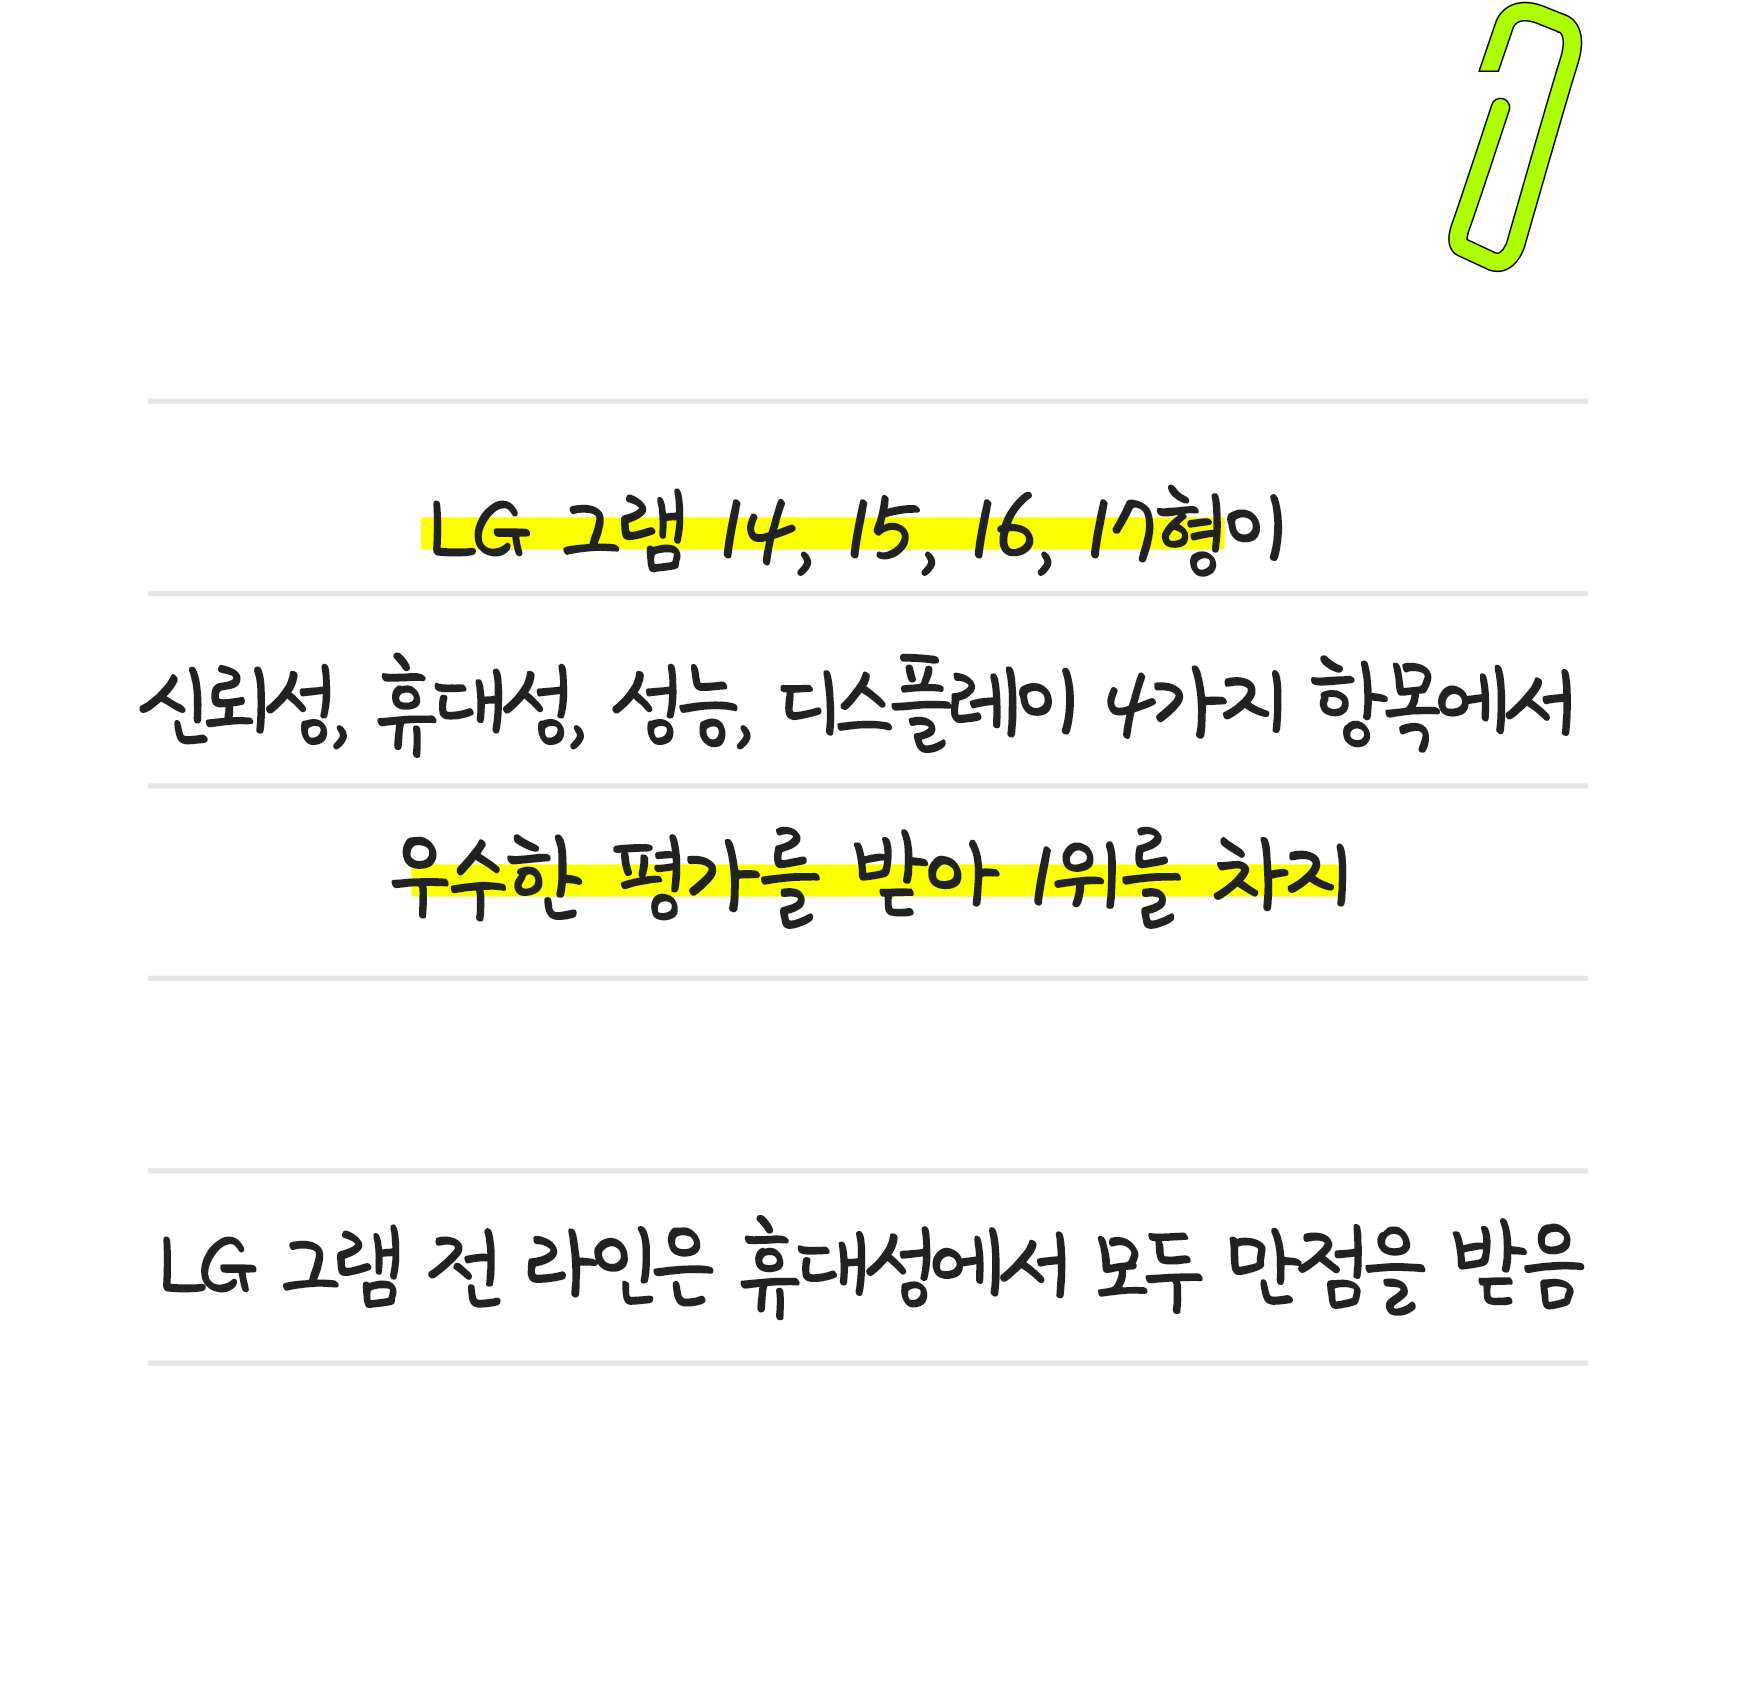 LG 그램 14, 15, 16, 17형이 신뢰성, 휴대성, 성능, 디스플레이 4가지 항목에서 우수한 평가를 받아 1위를 차지 / LG 그램 전 라인은 휴대성은 모두 만점을 받음